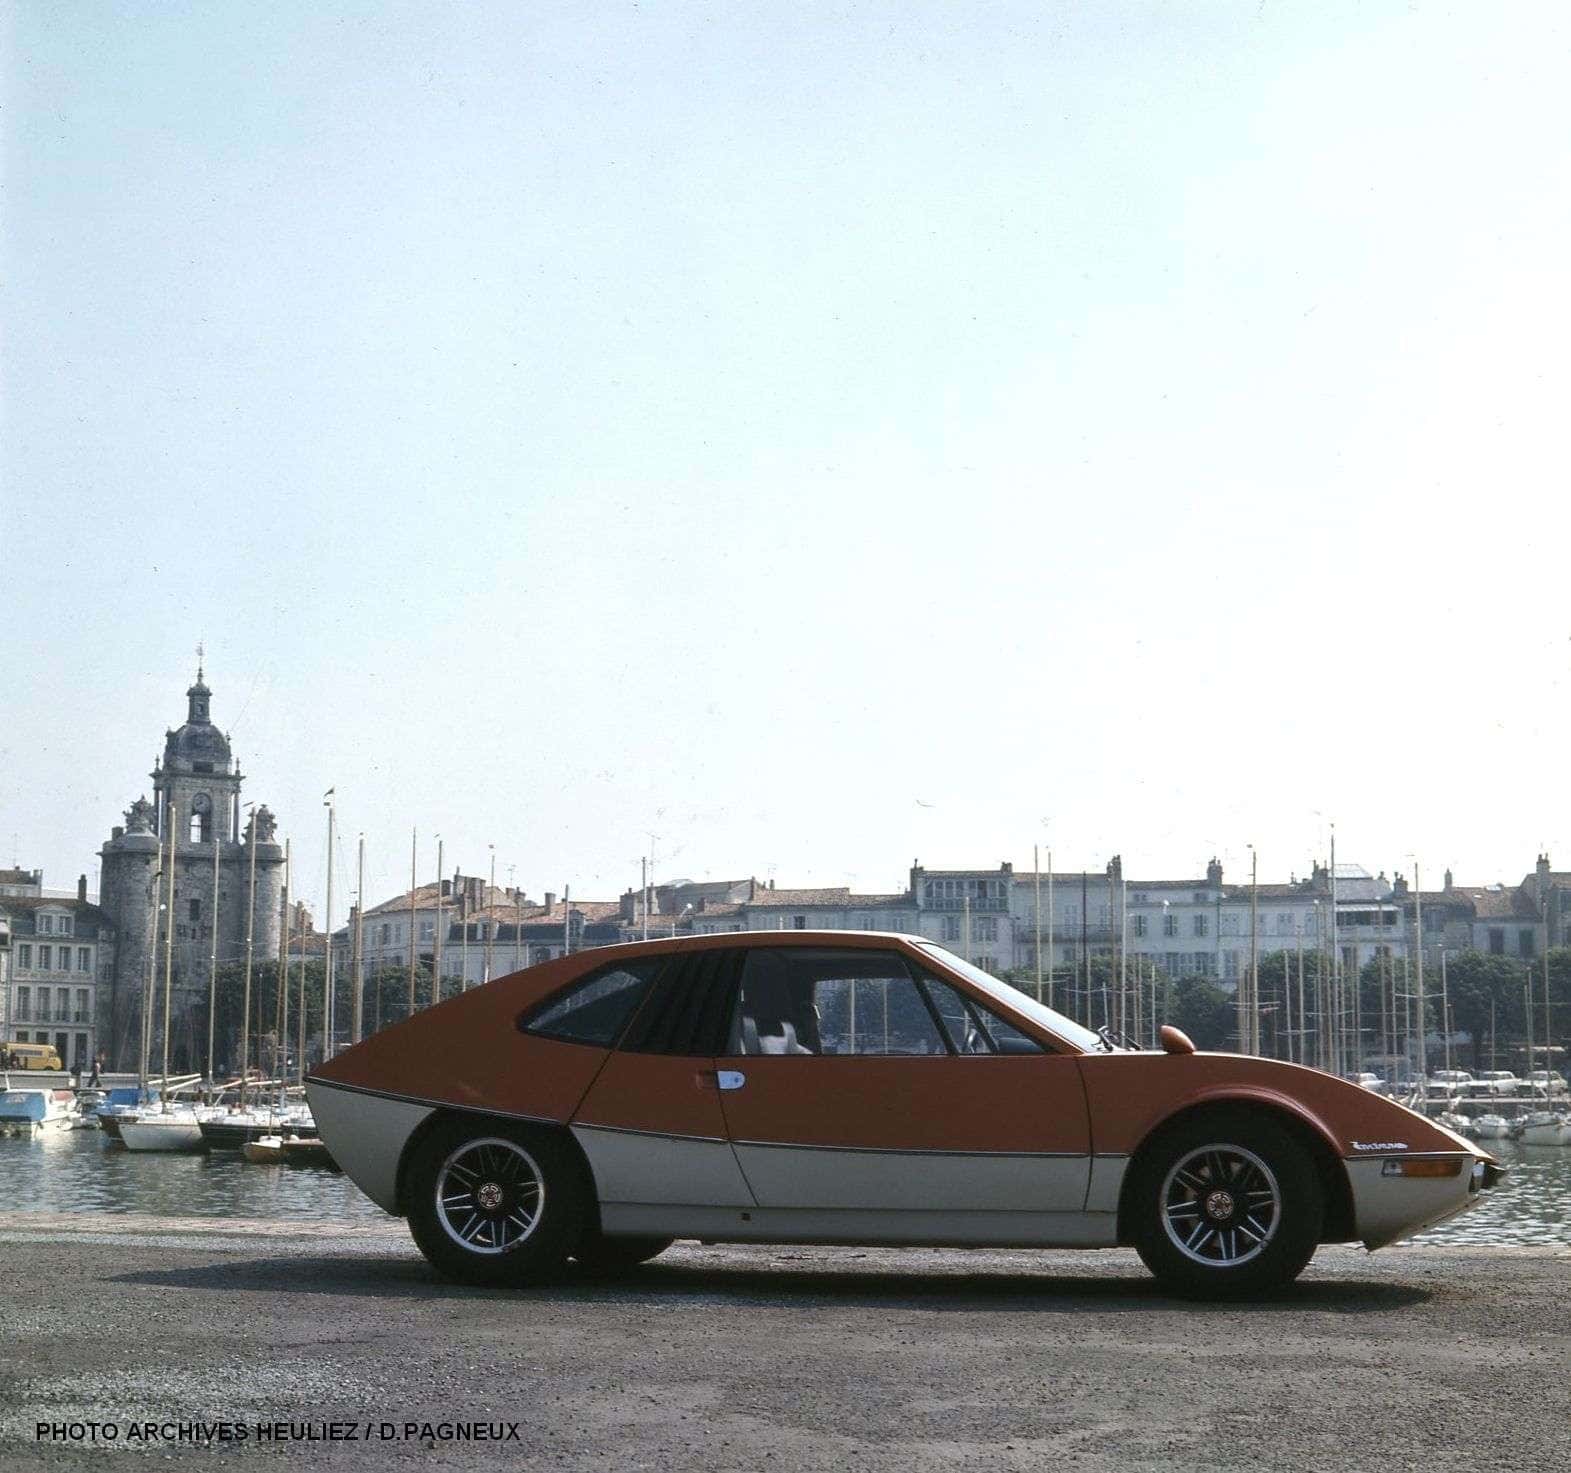 1970 Porsche 914 - Porsche 914-6 Coupe Prototype - ex-Paris and Geneva'70 Motorshows - exPorsche Museum - Used - VIN 130005___________ - 14,500 Miles - 6 cyl - 2WD - Manual - Coupe - Orange - Strasbourg, France